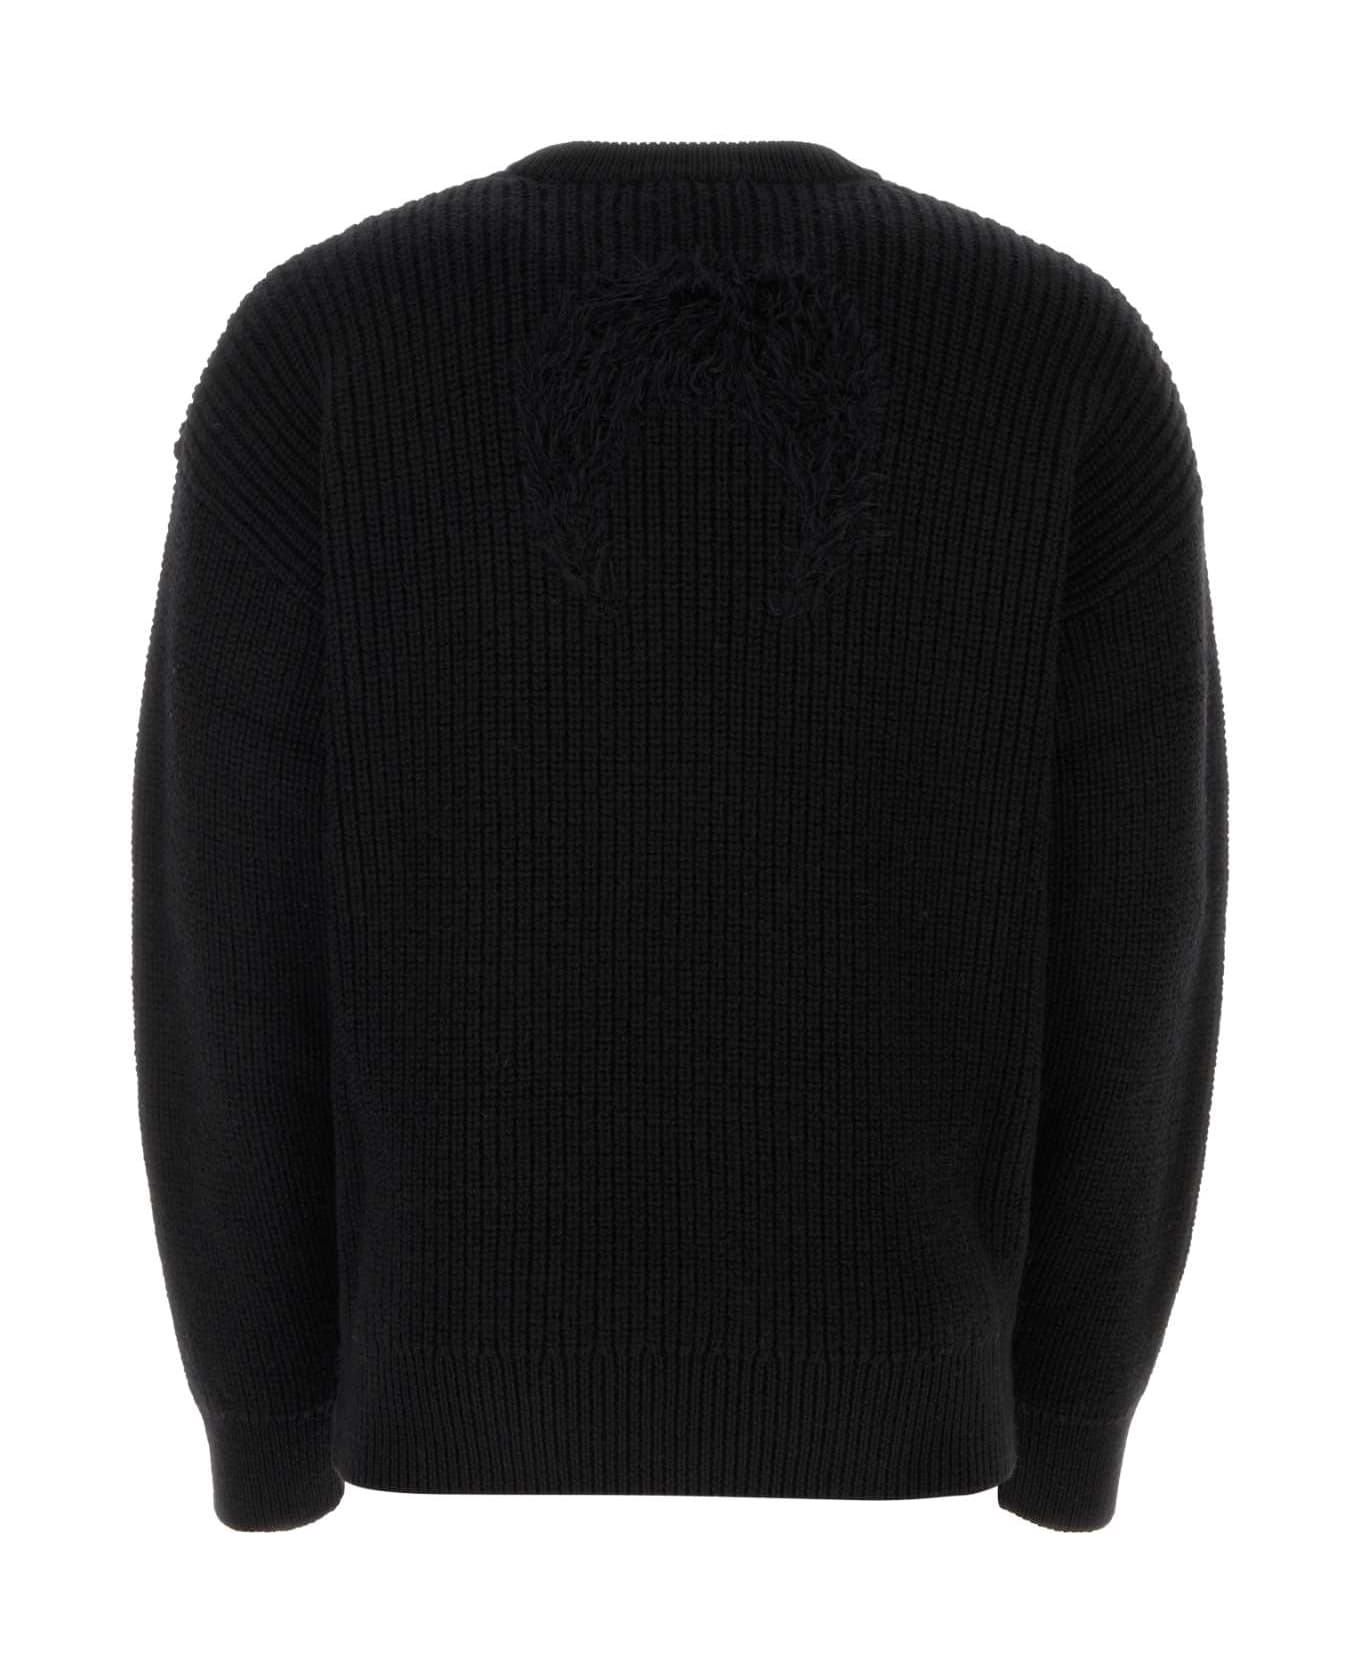 Marine Serre Black Wool Blend Sweater - BK99